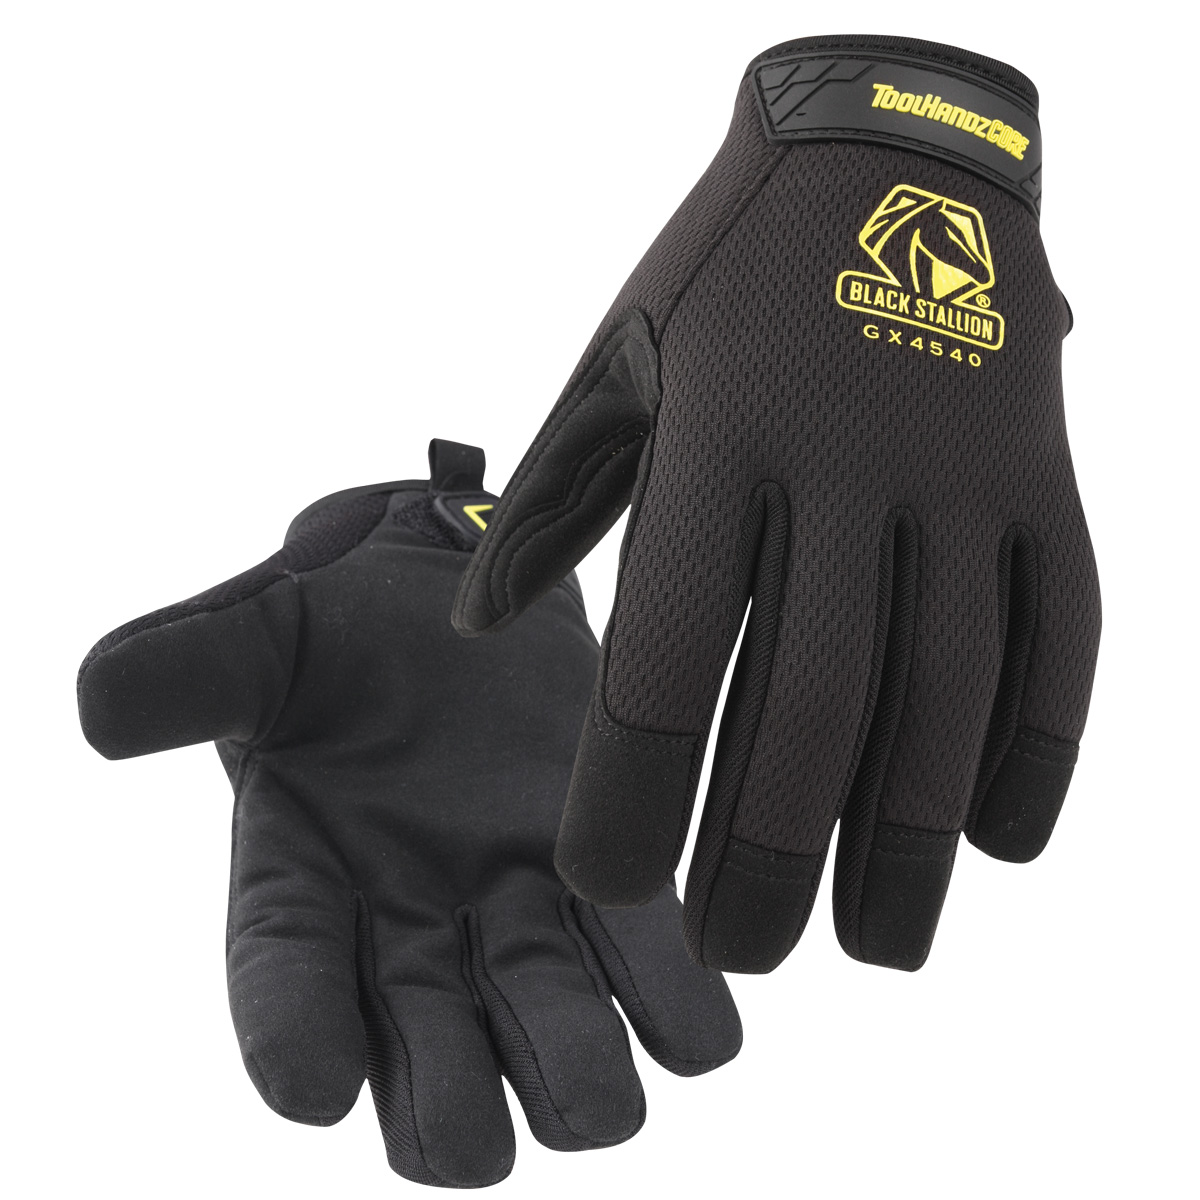 Black Stallion ToolHandz CORE Multiuse Mechanics Gloves from GME Supply